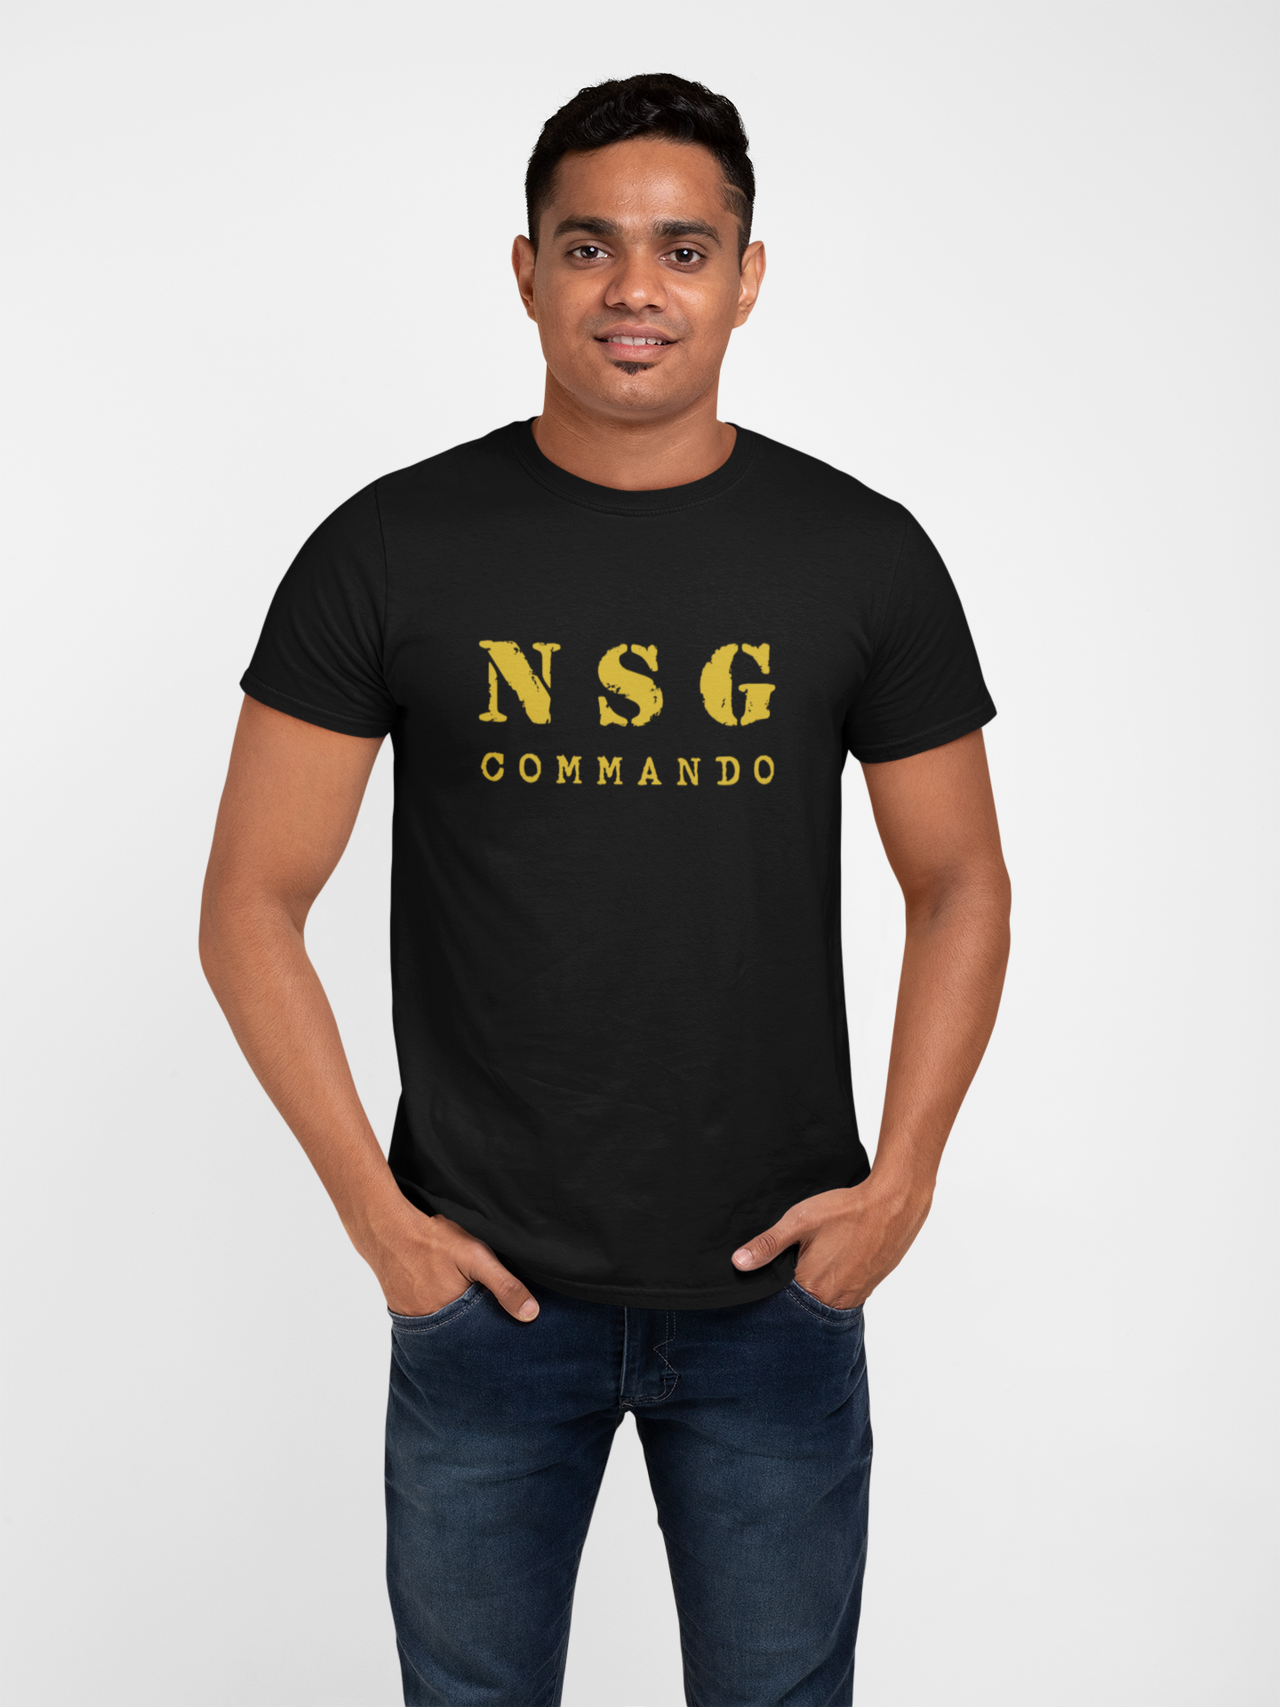 NSG T-shirt - NSG - Commando (Men)